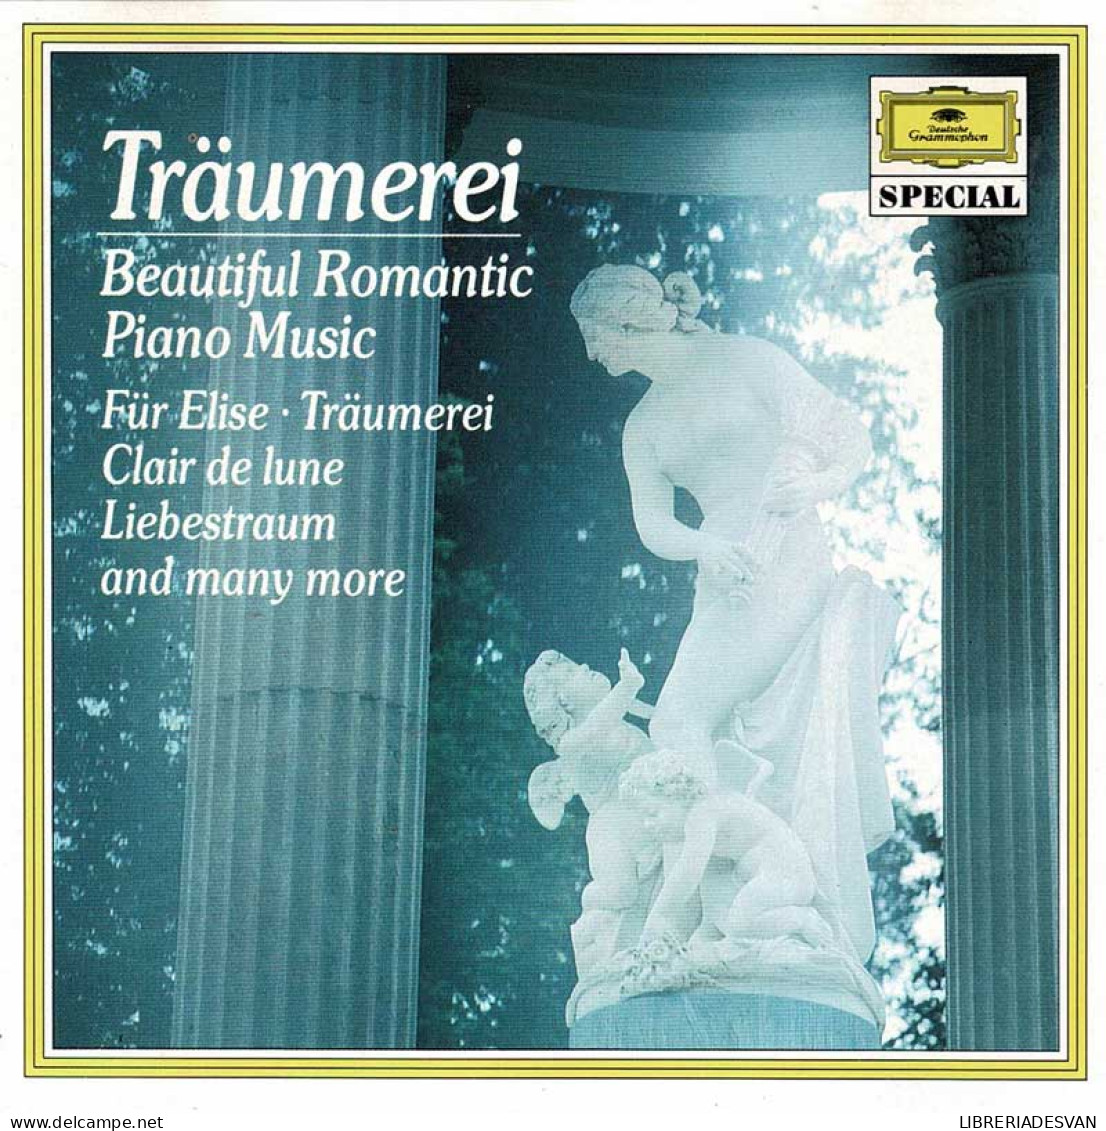 Träumerei. Beautiful Romantic Piano Music. CD - Classical